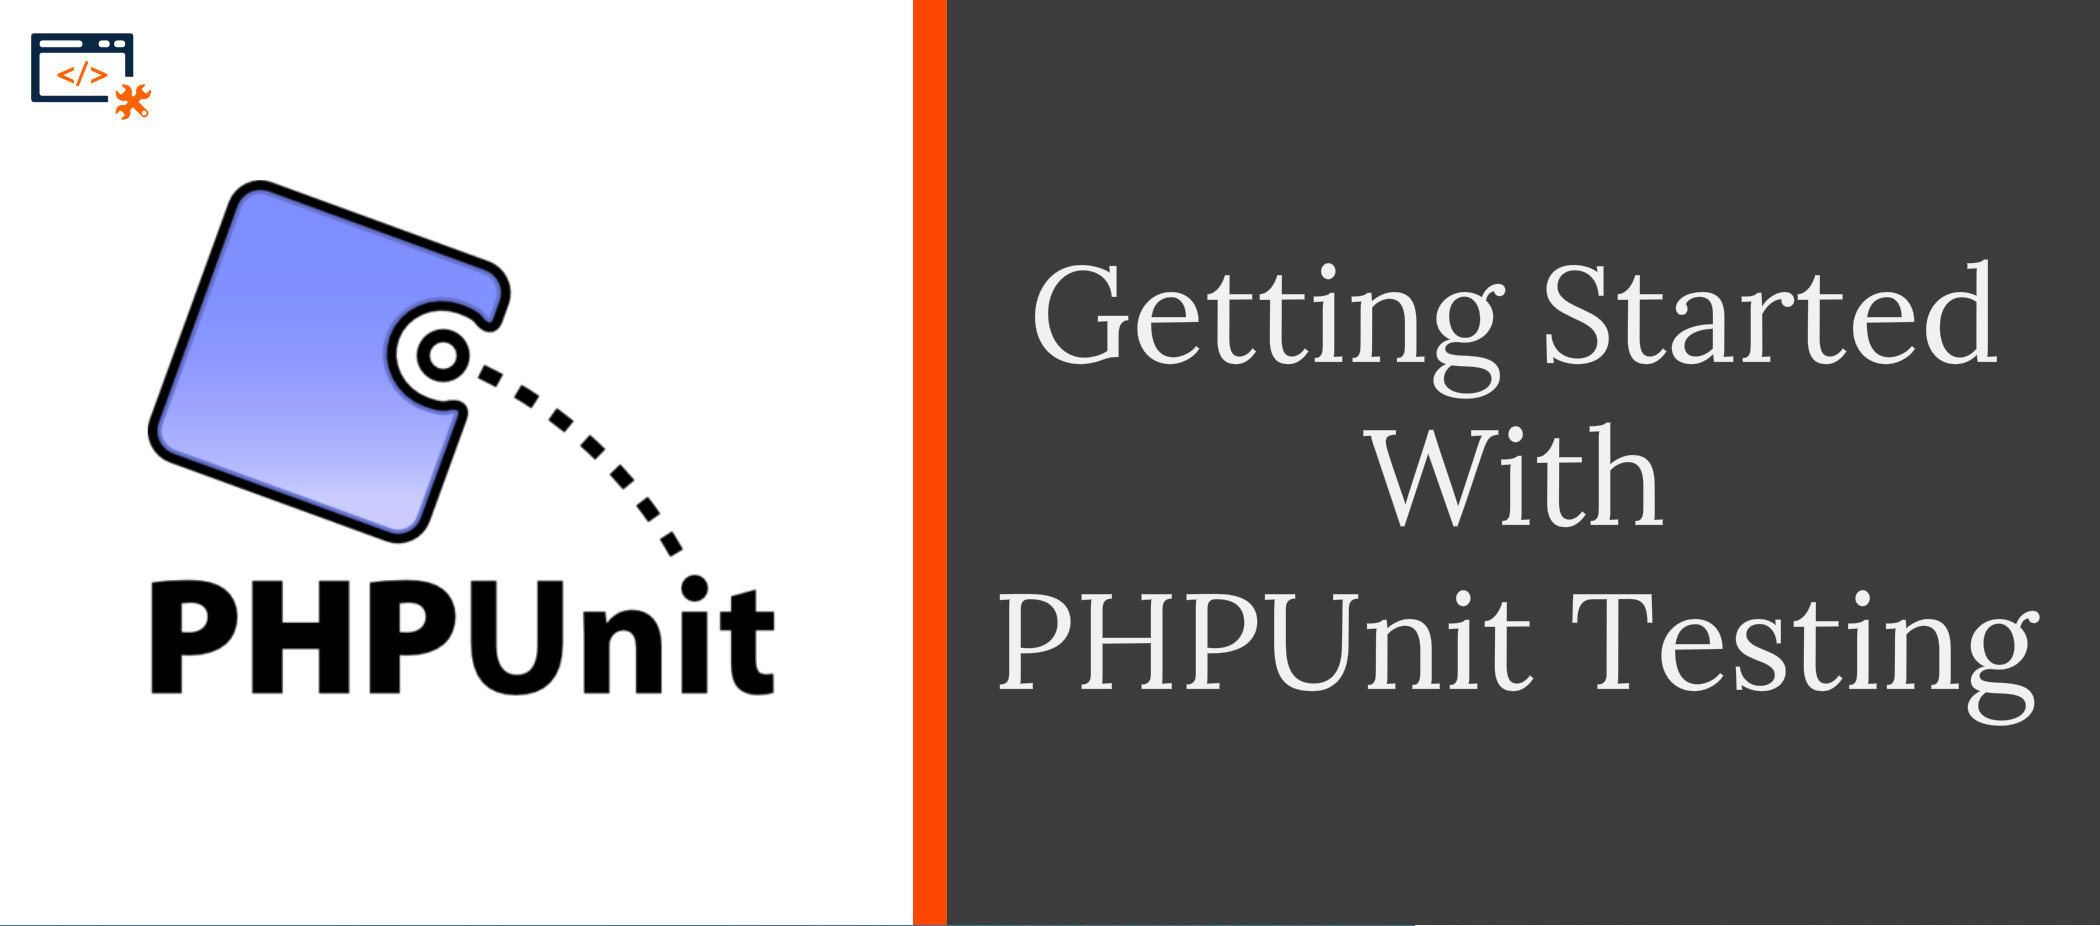 PHPUnit Testing